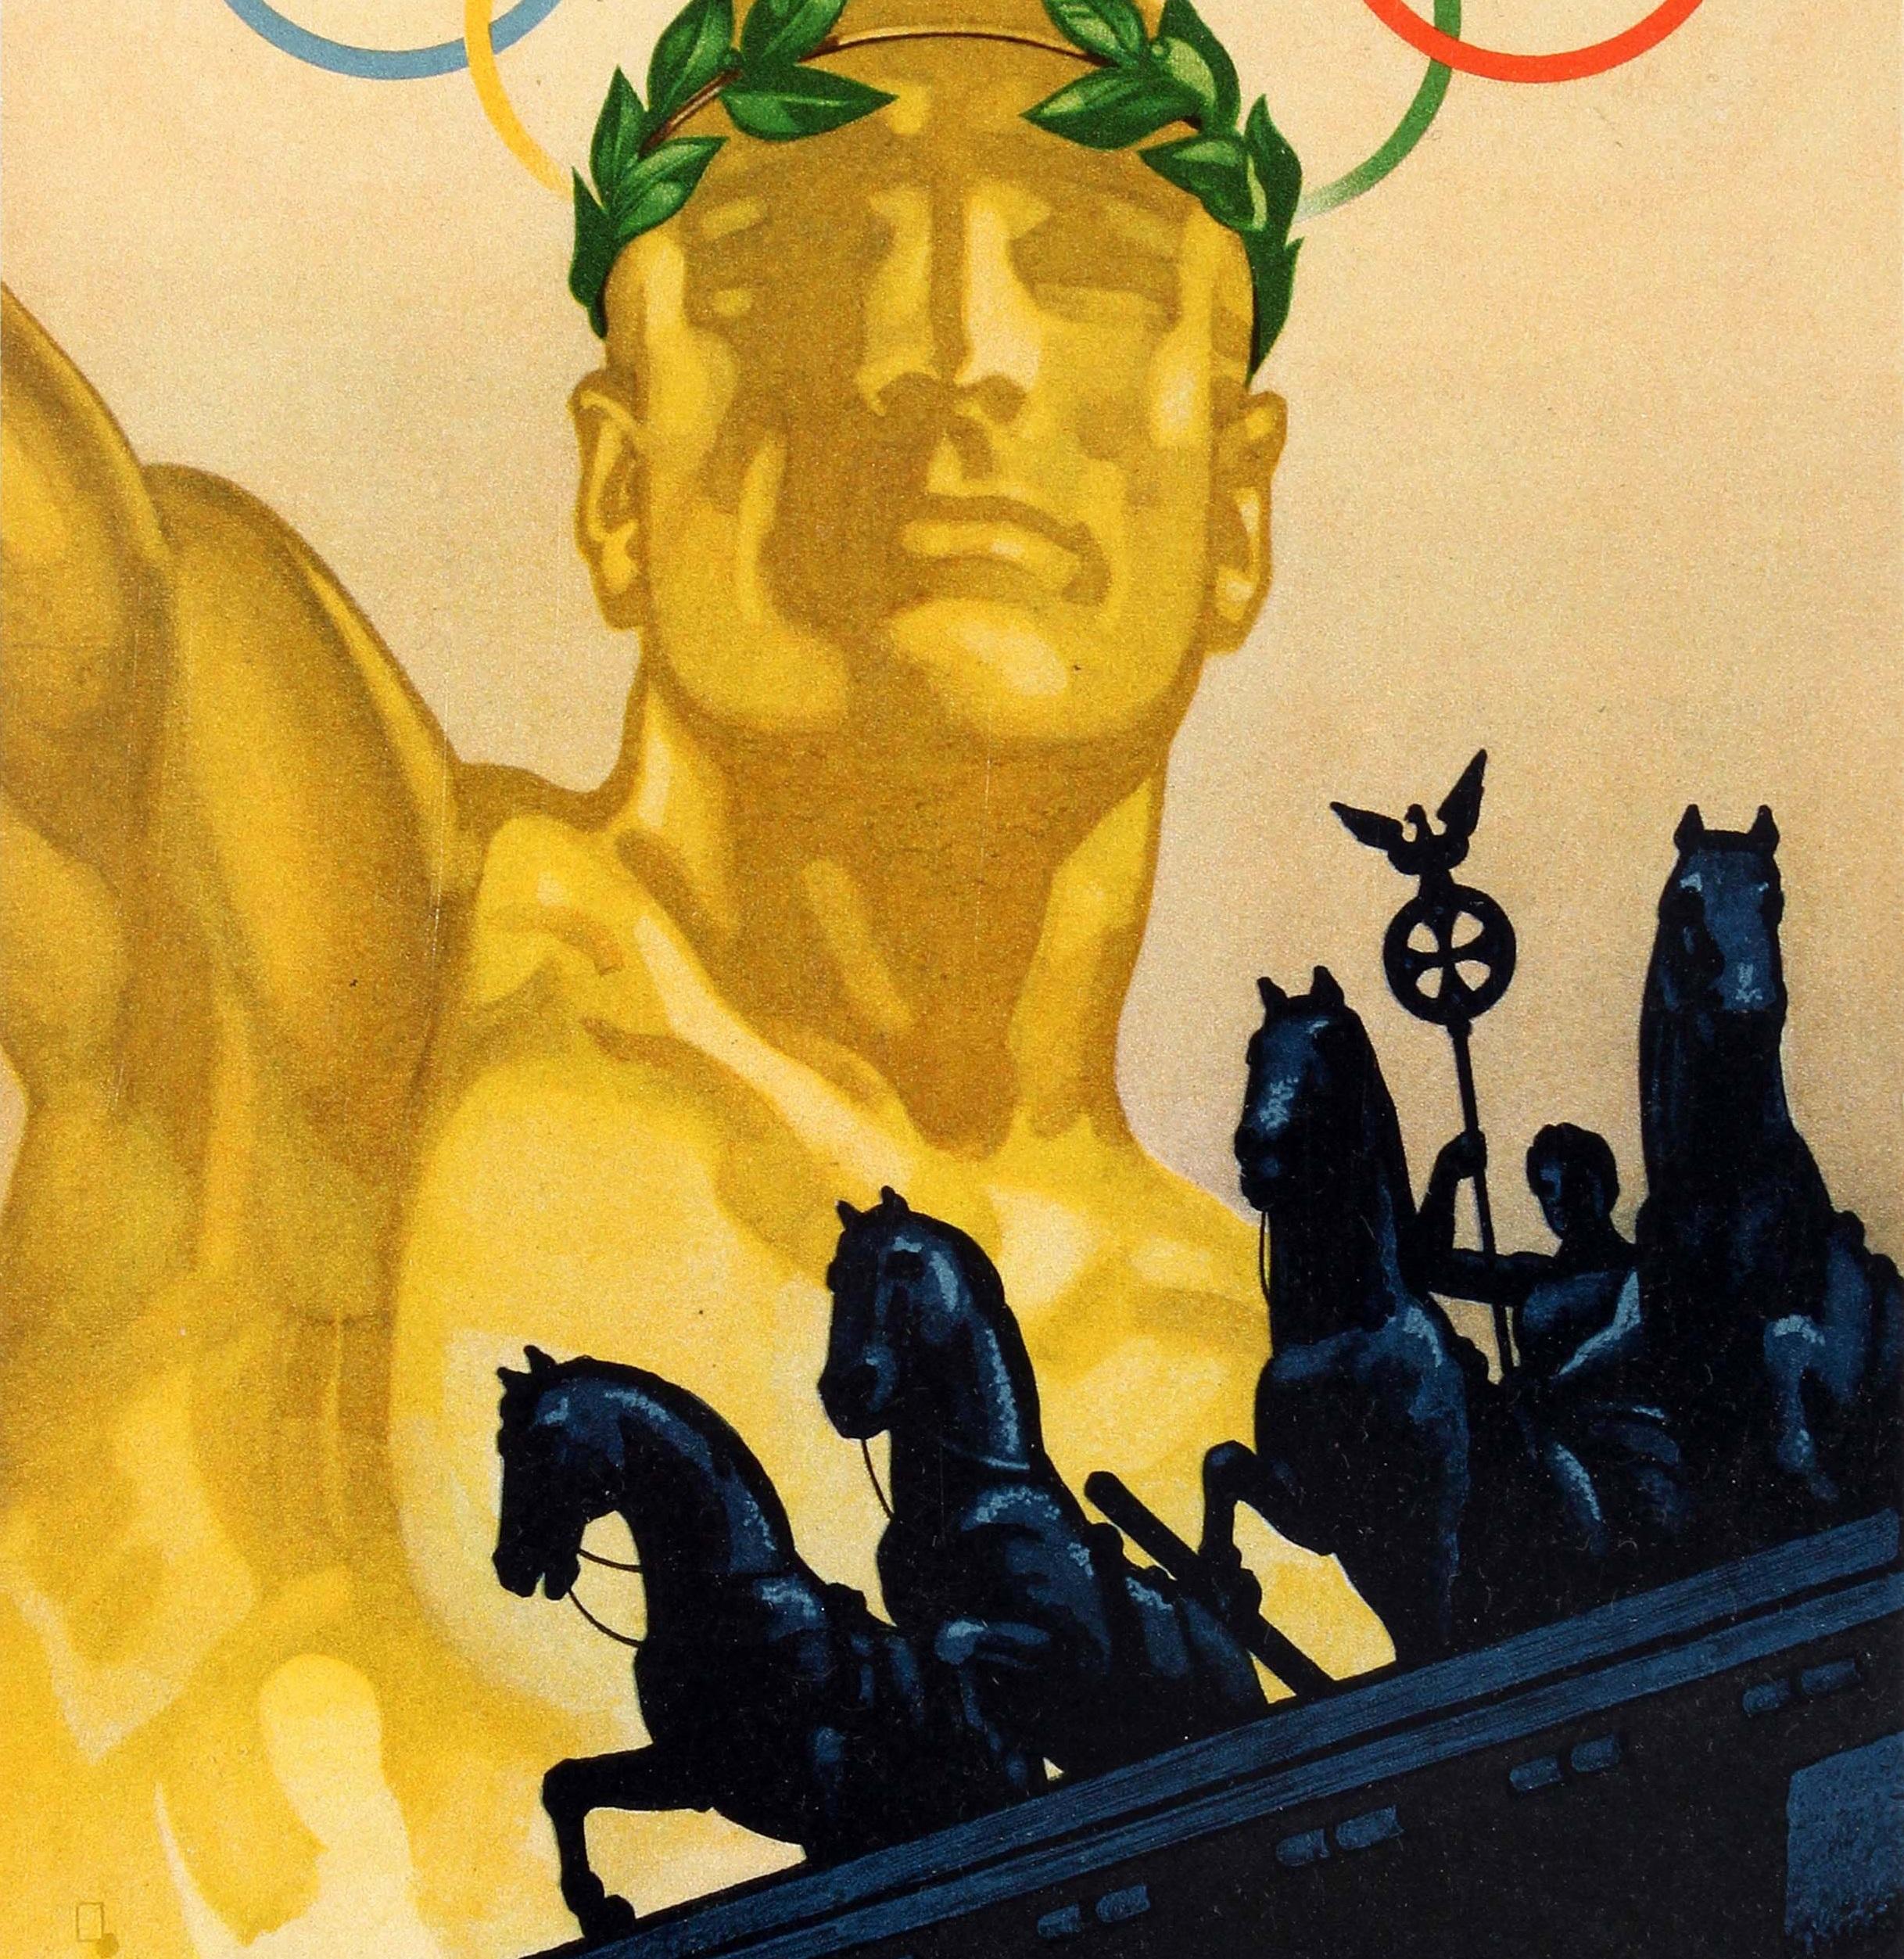 1936 berlin olympics poster